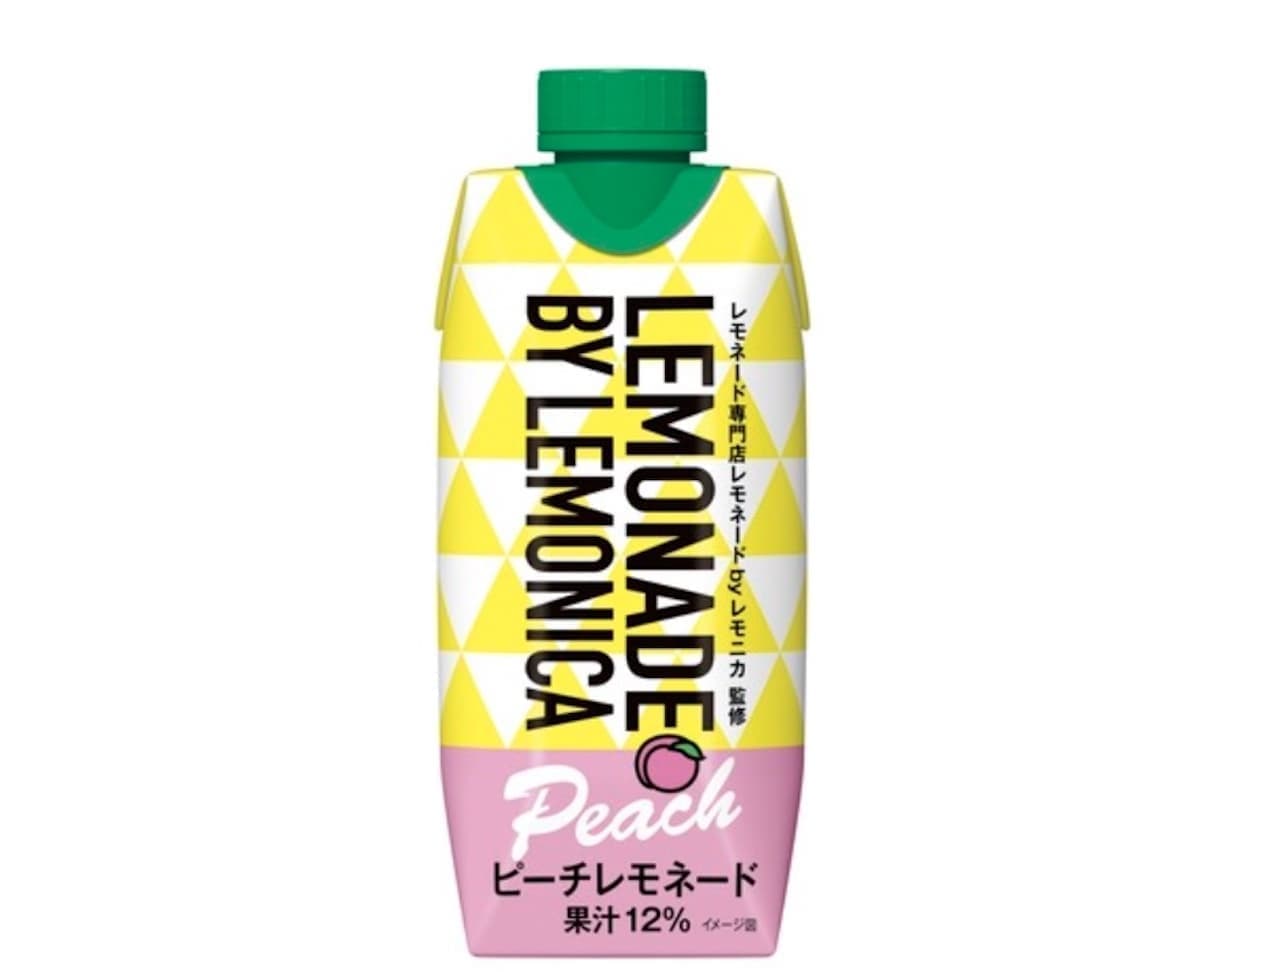 "Peach Lemonade by Lemonade" collaboration drink 4th